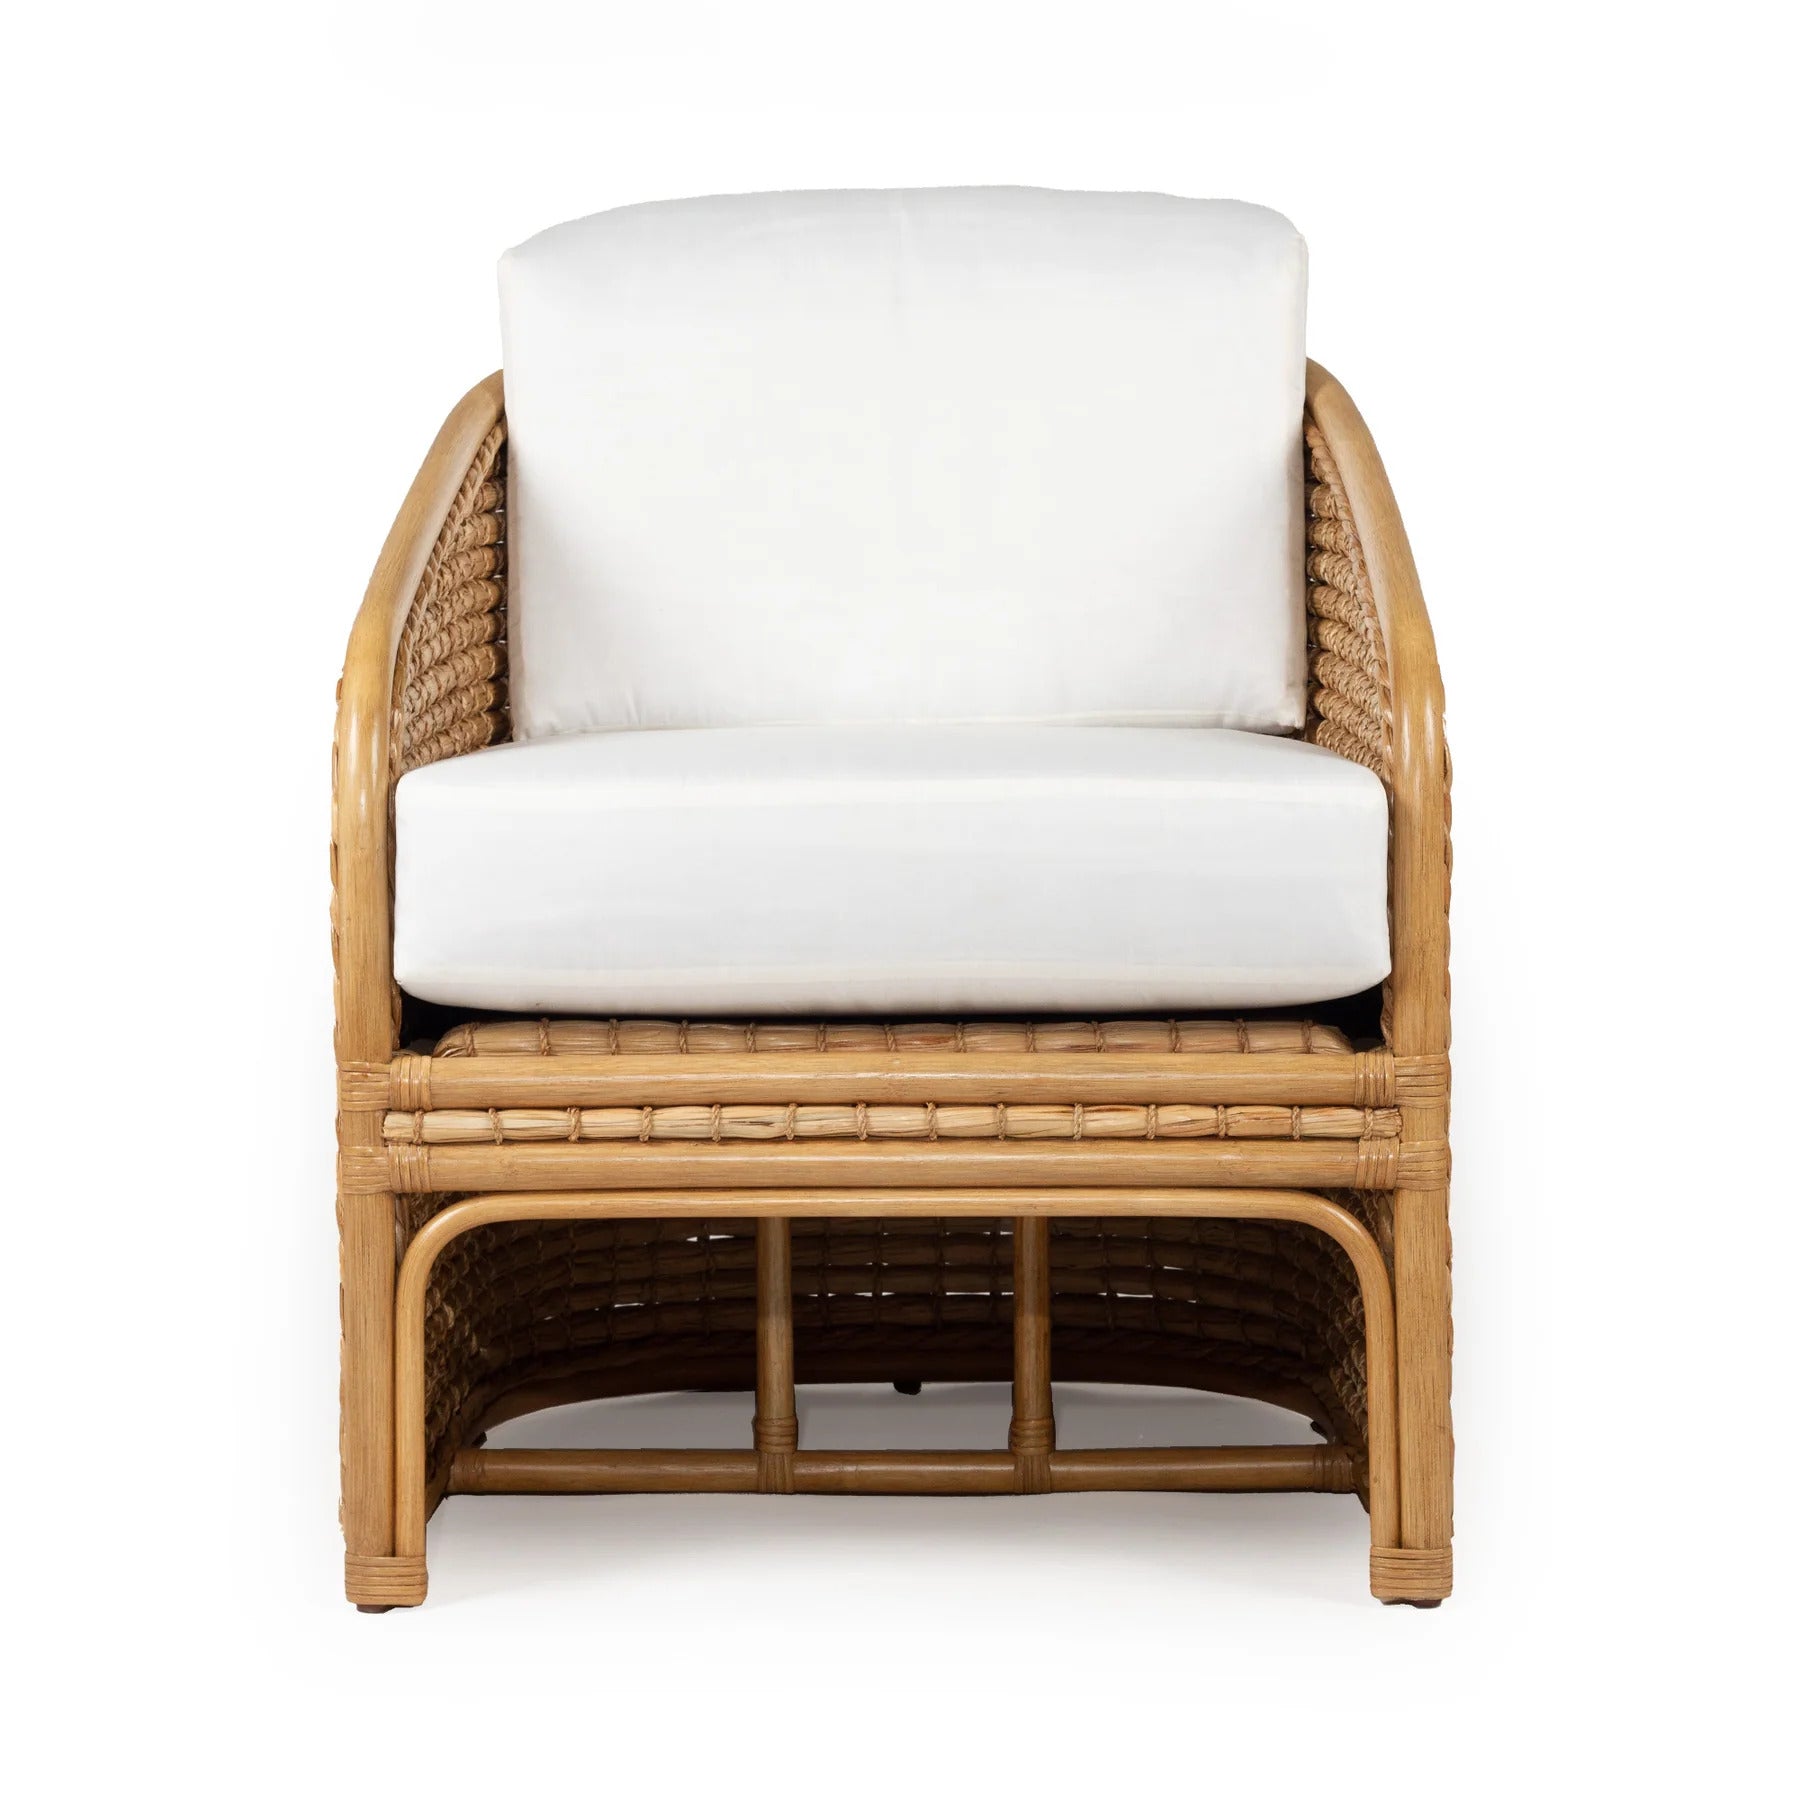 Castello Lounge Chair.